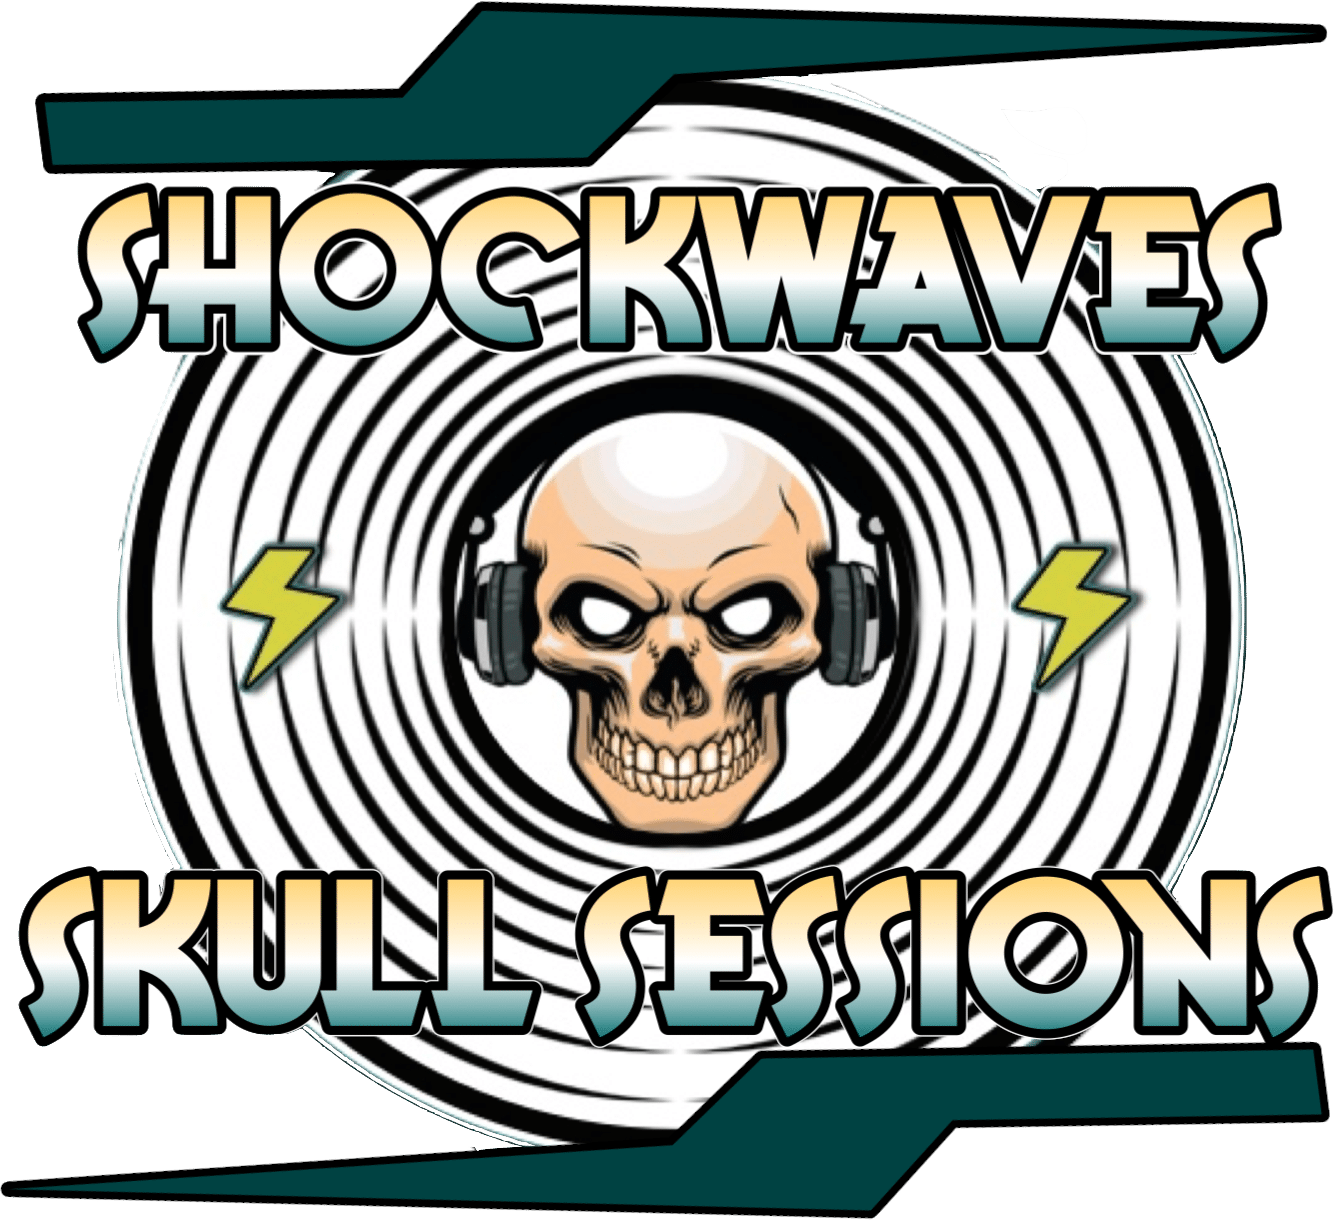 Image: Shockwaves Skullsessions, Podcast